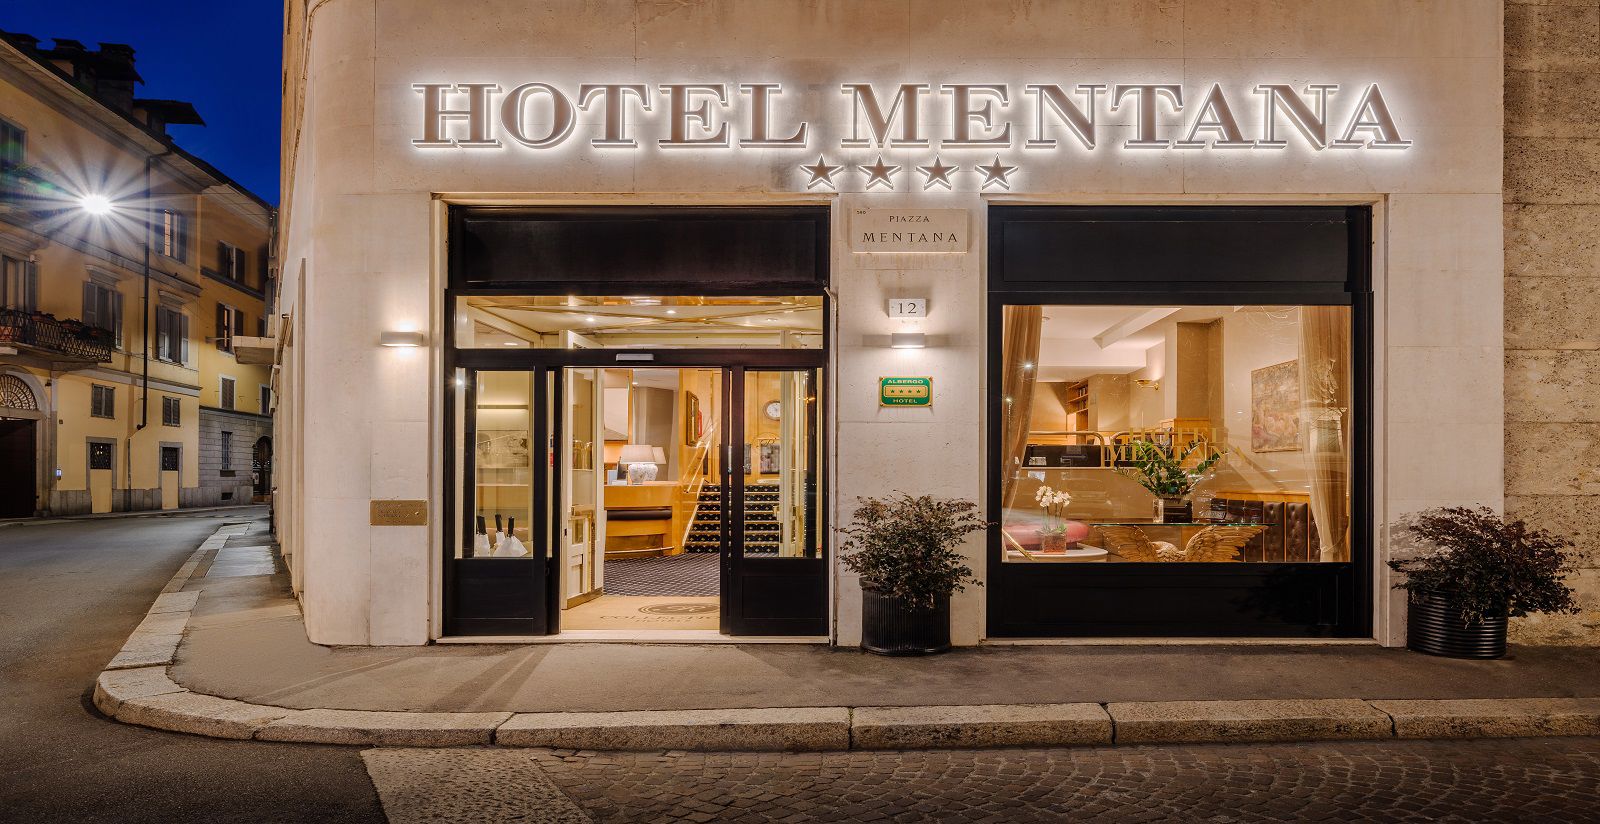 Hotel Mentana - Hotel 3